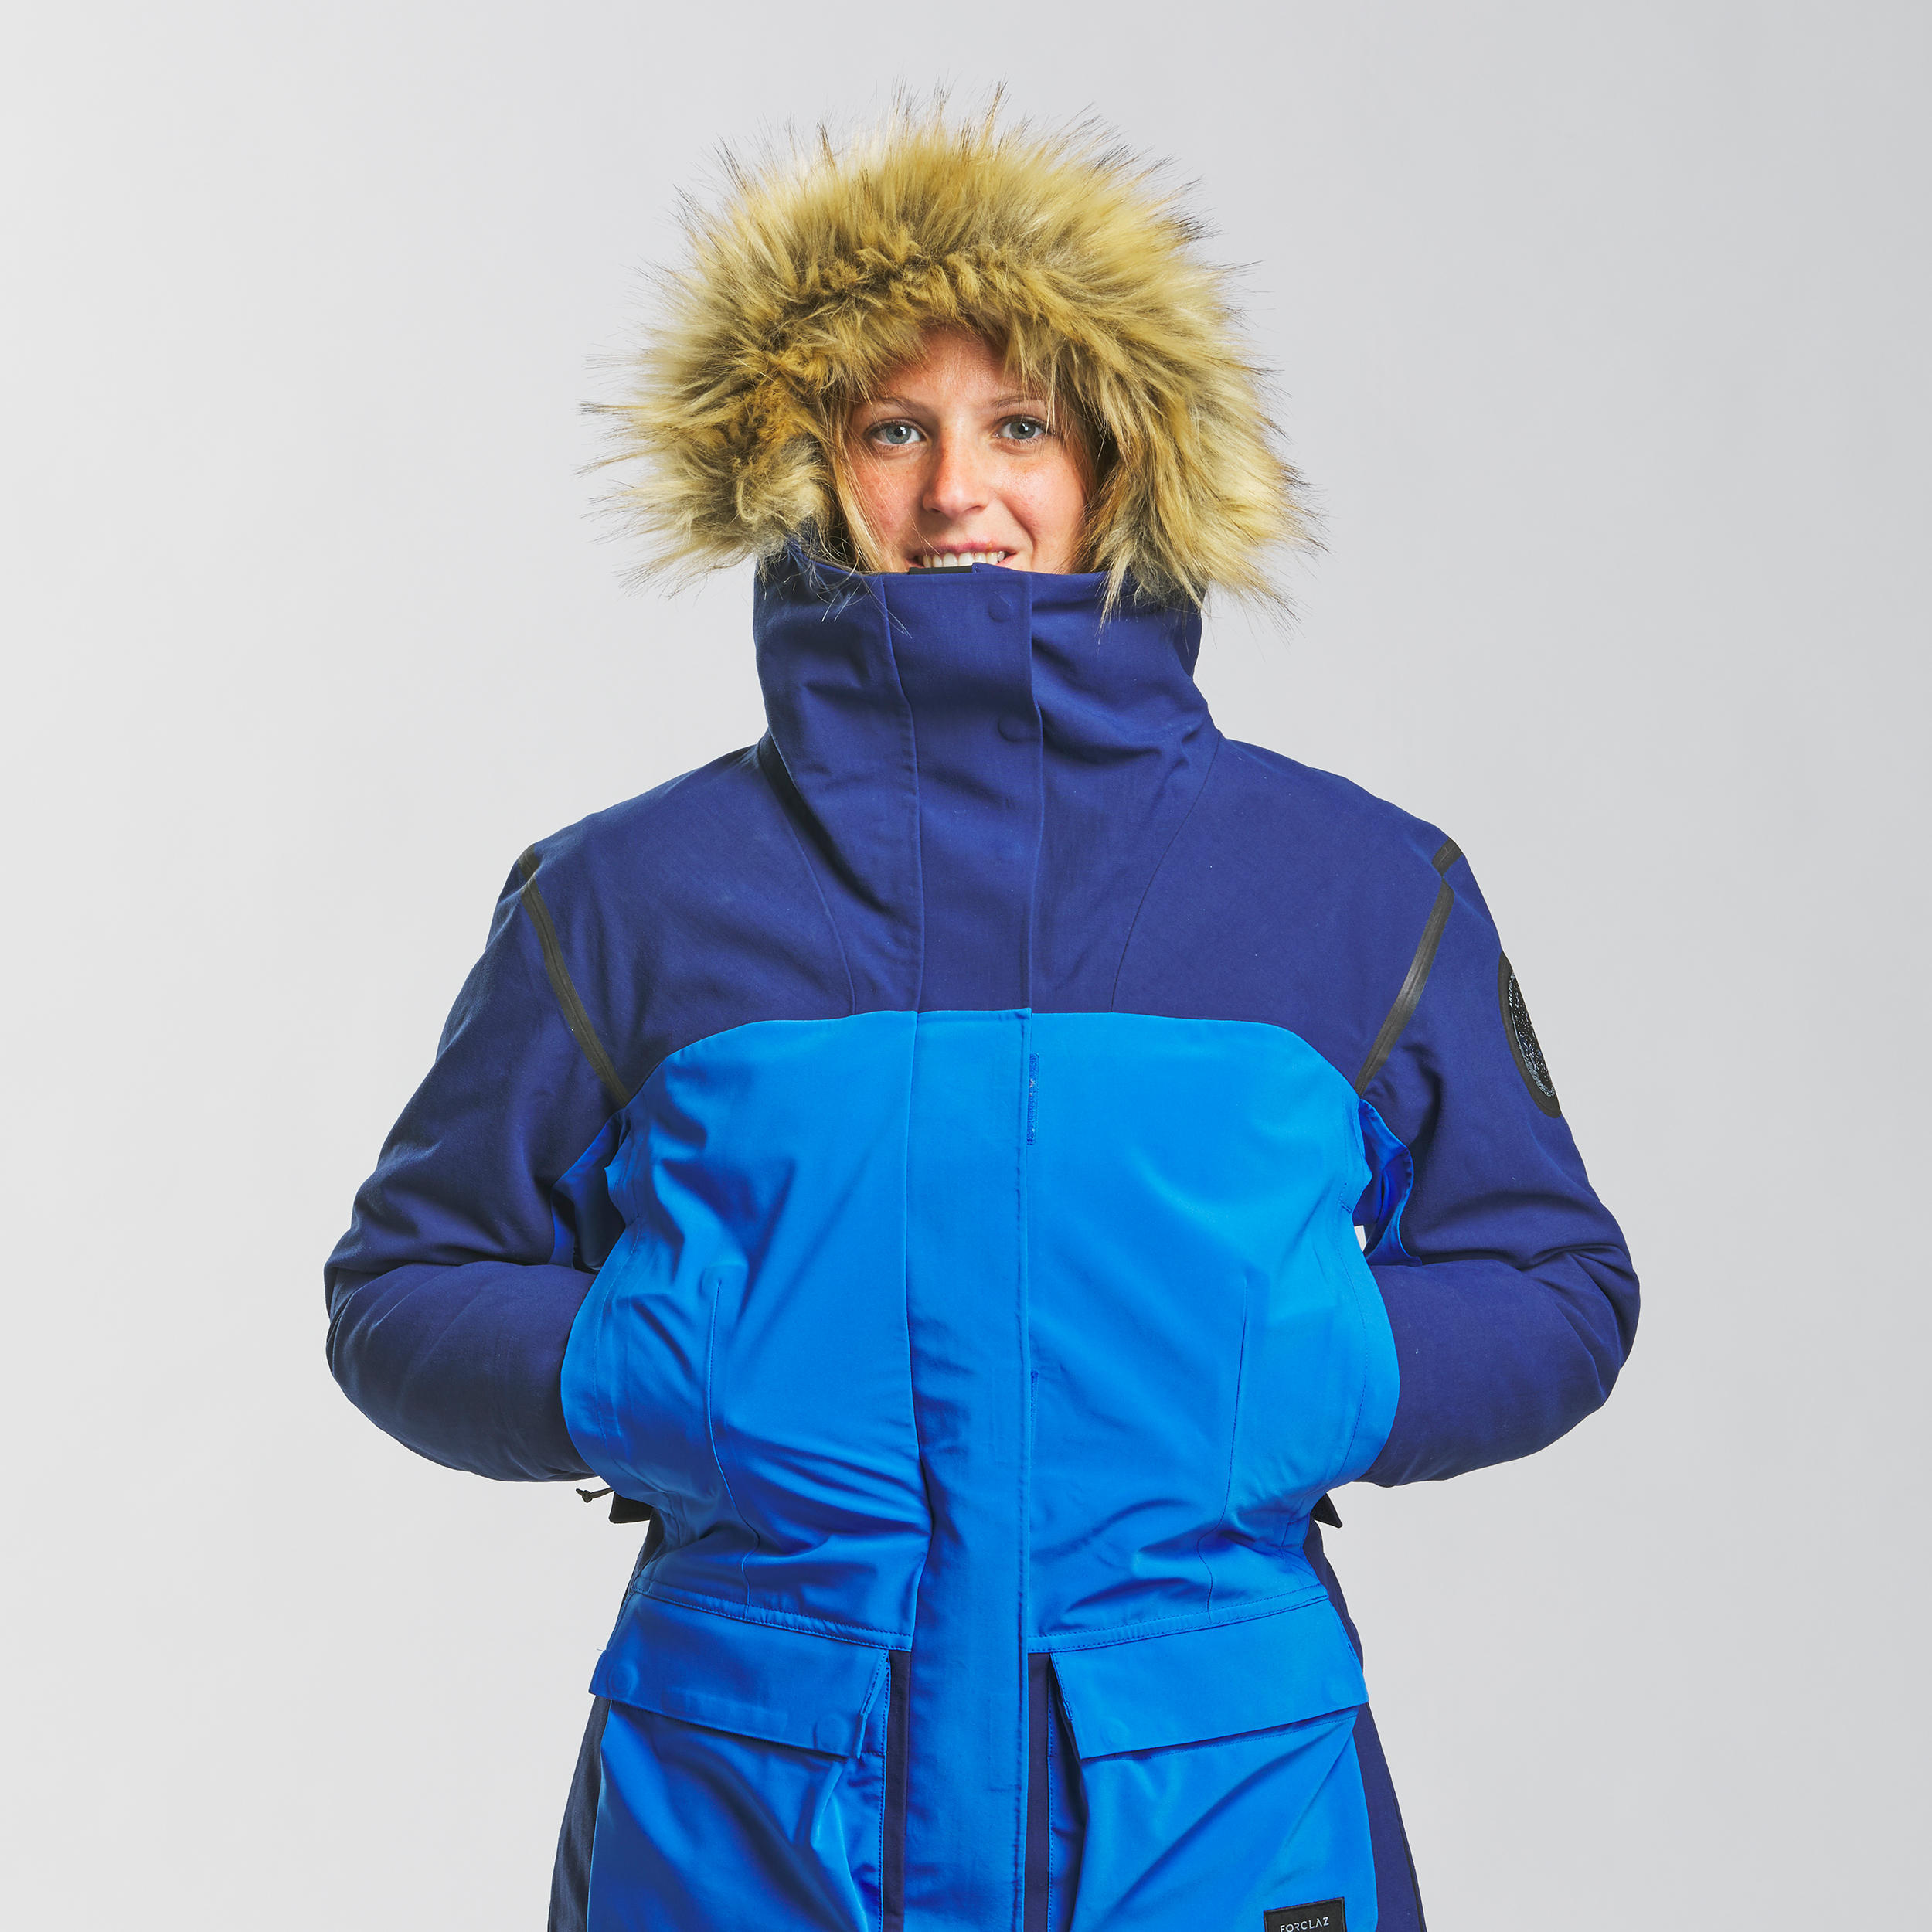 3in1 waterproof parka trekking jacket - Artic 900 -33°C - Women's 8/20